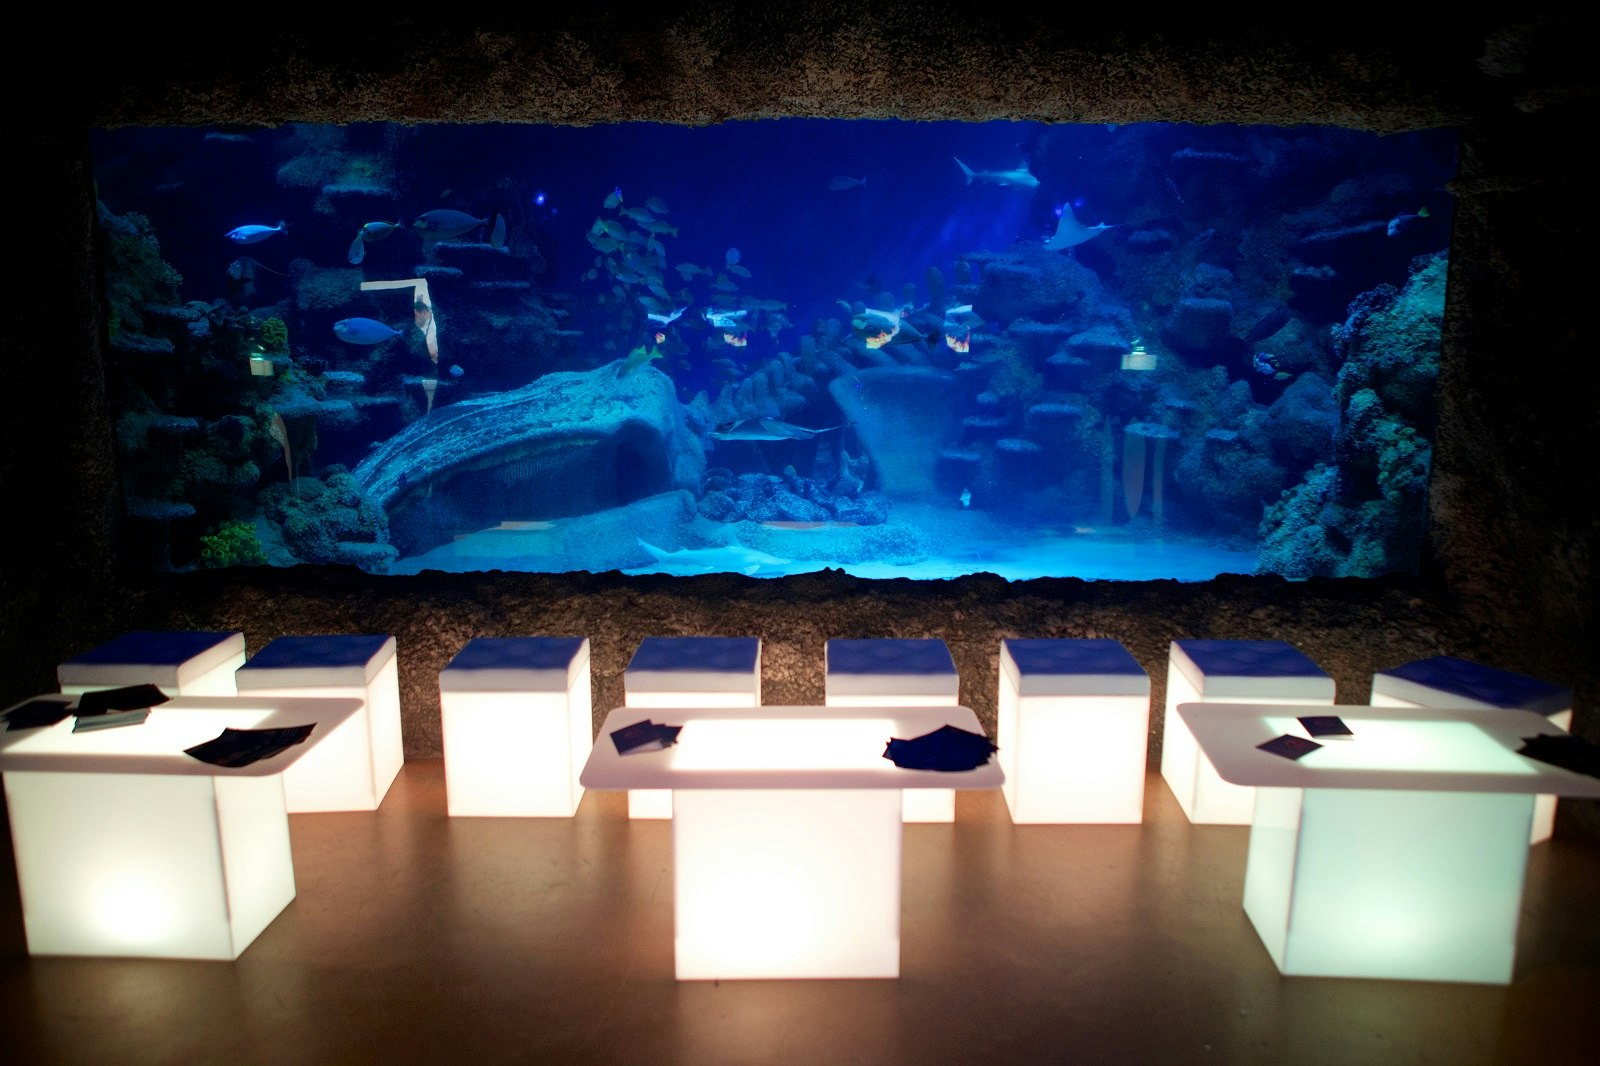 Private Bars Venues in London - SEA LIFE London Aquarium